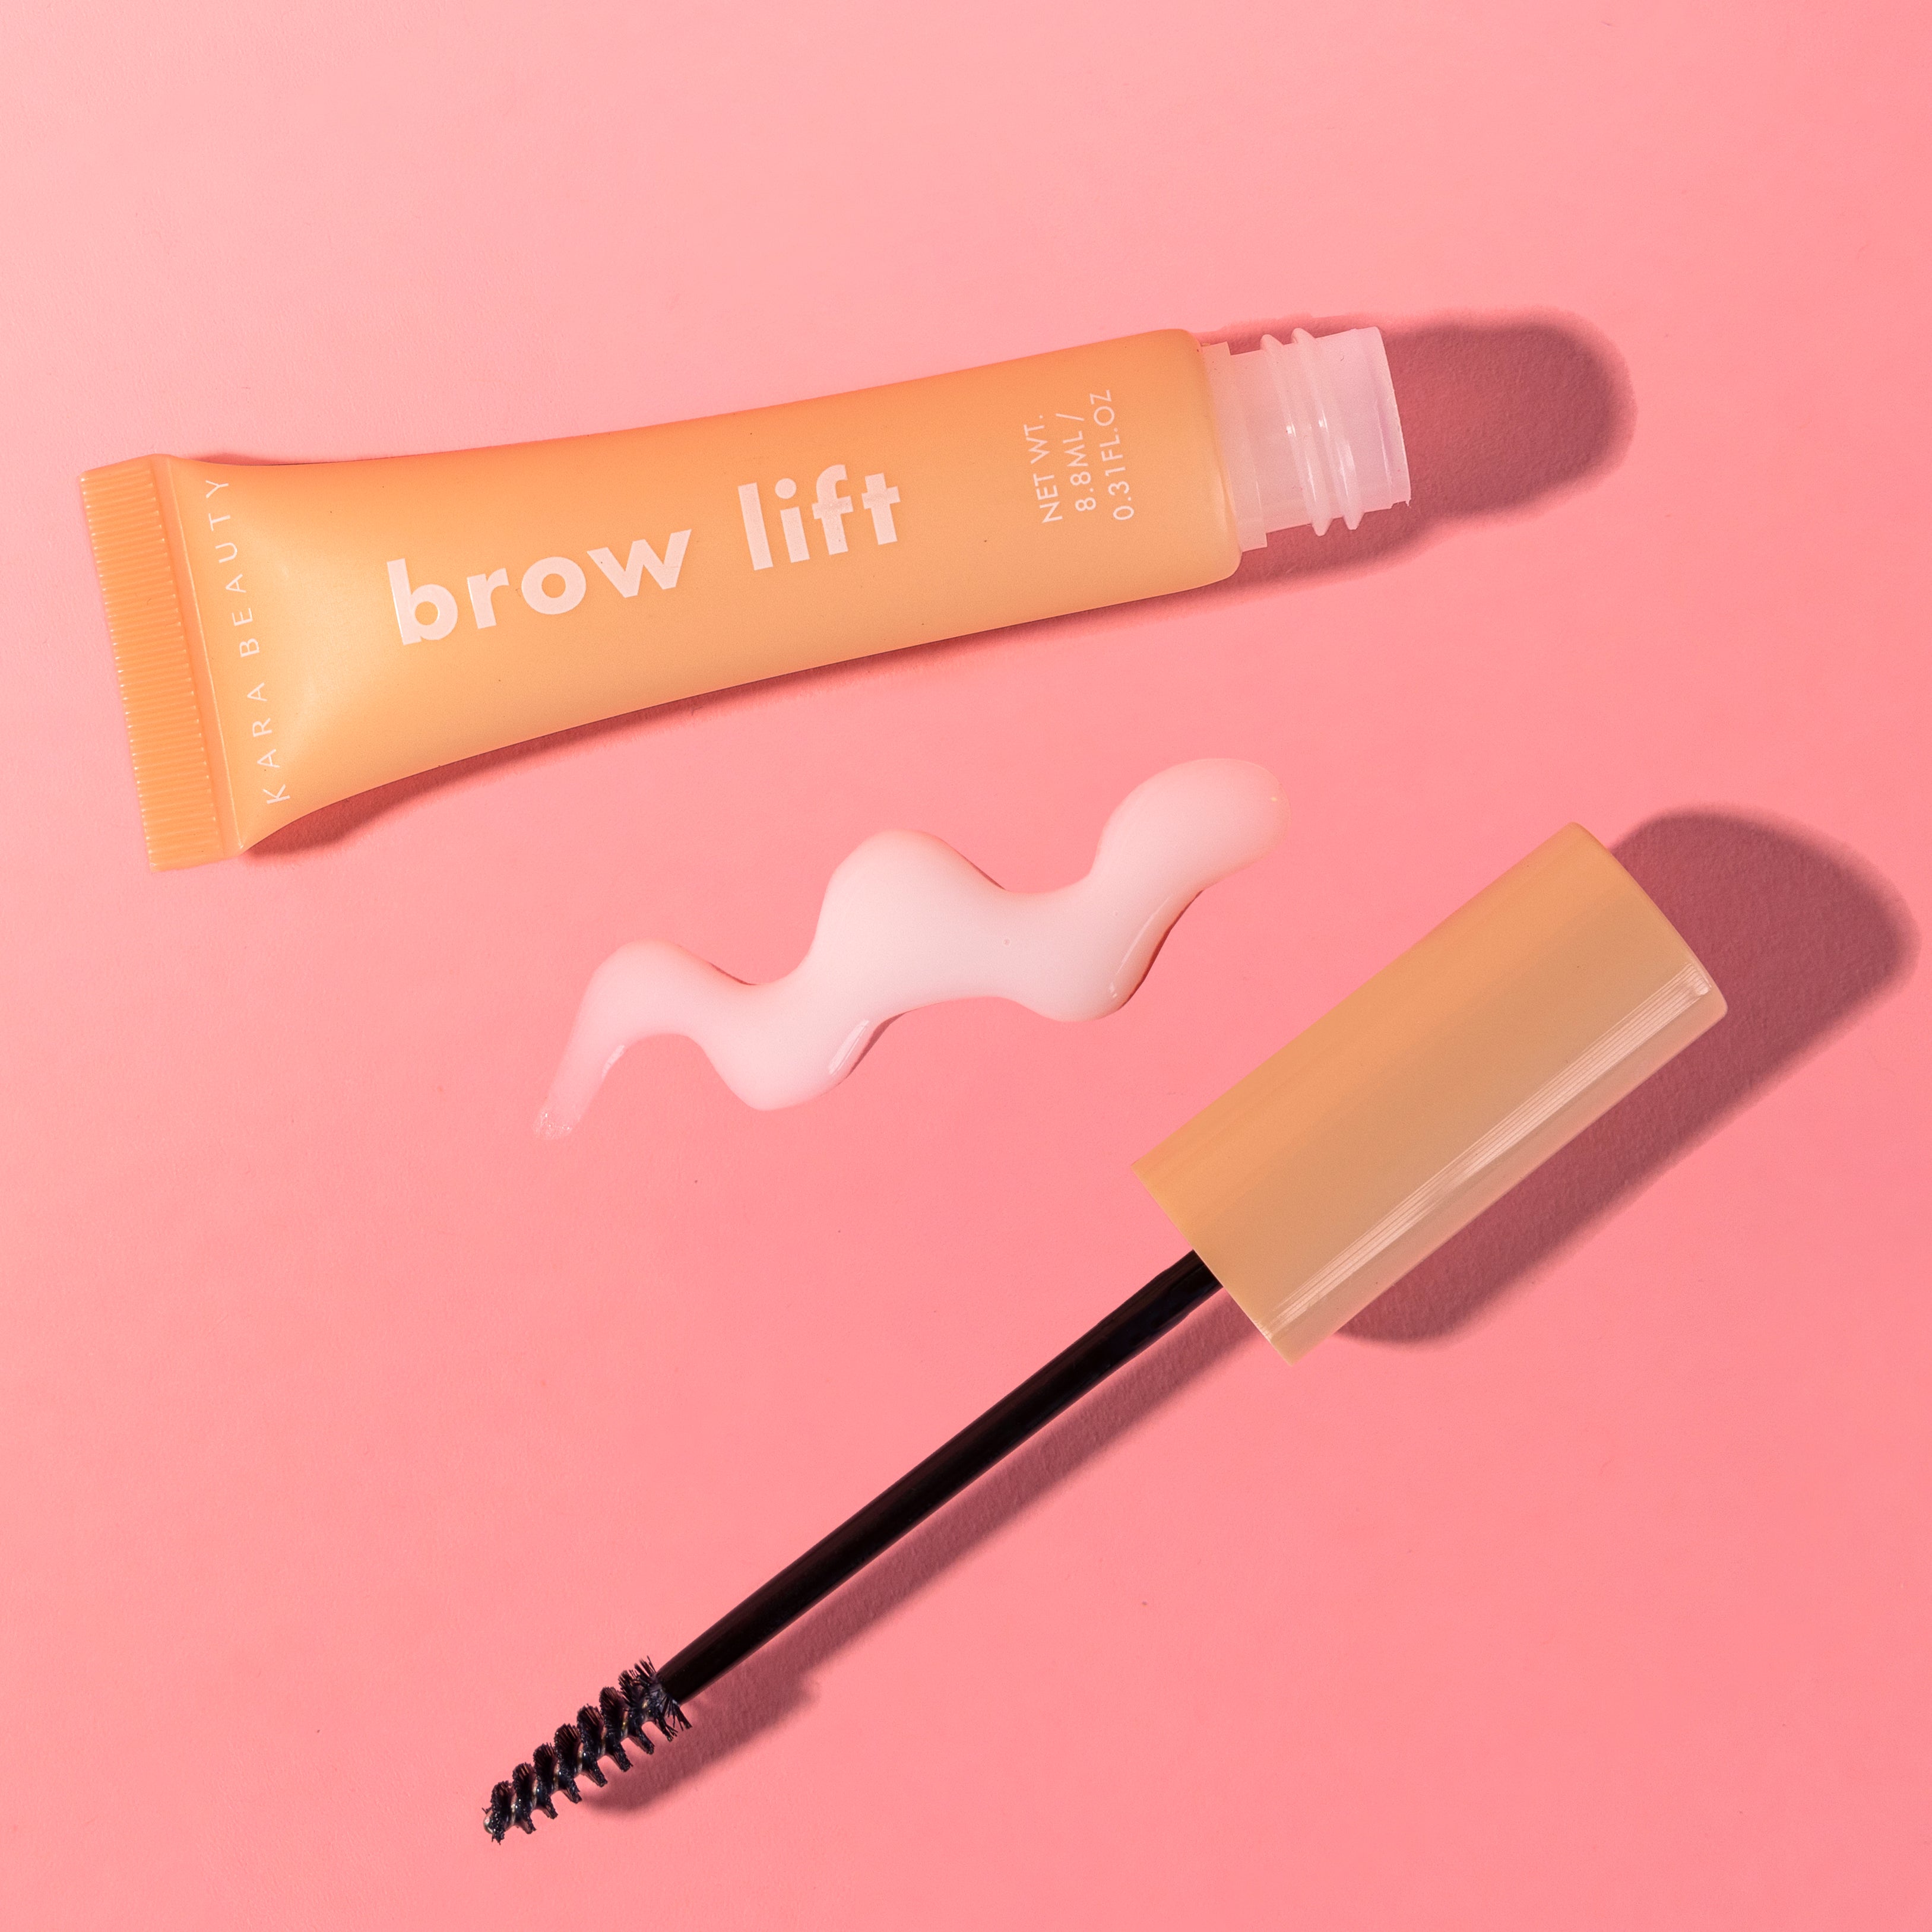 Kara Beauty's Brow Lift Clear Vegan Eyebrow Setting Glue